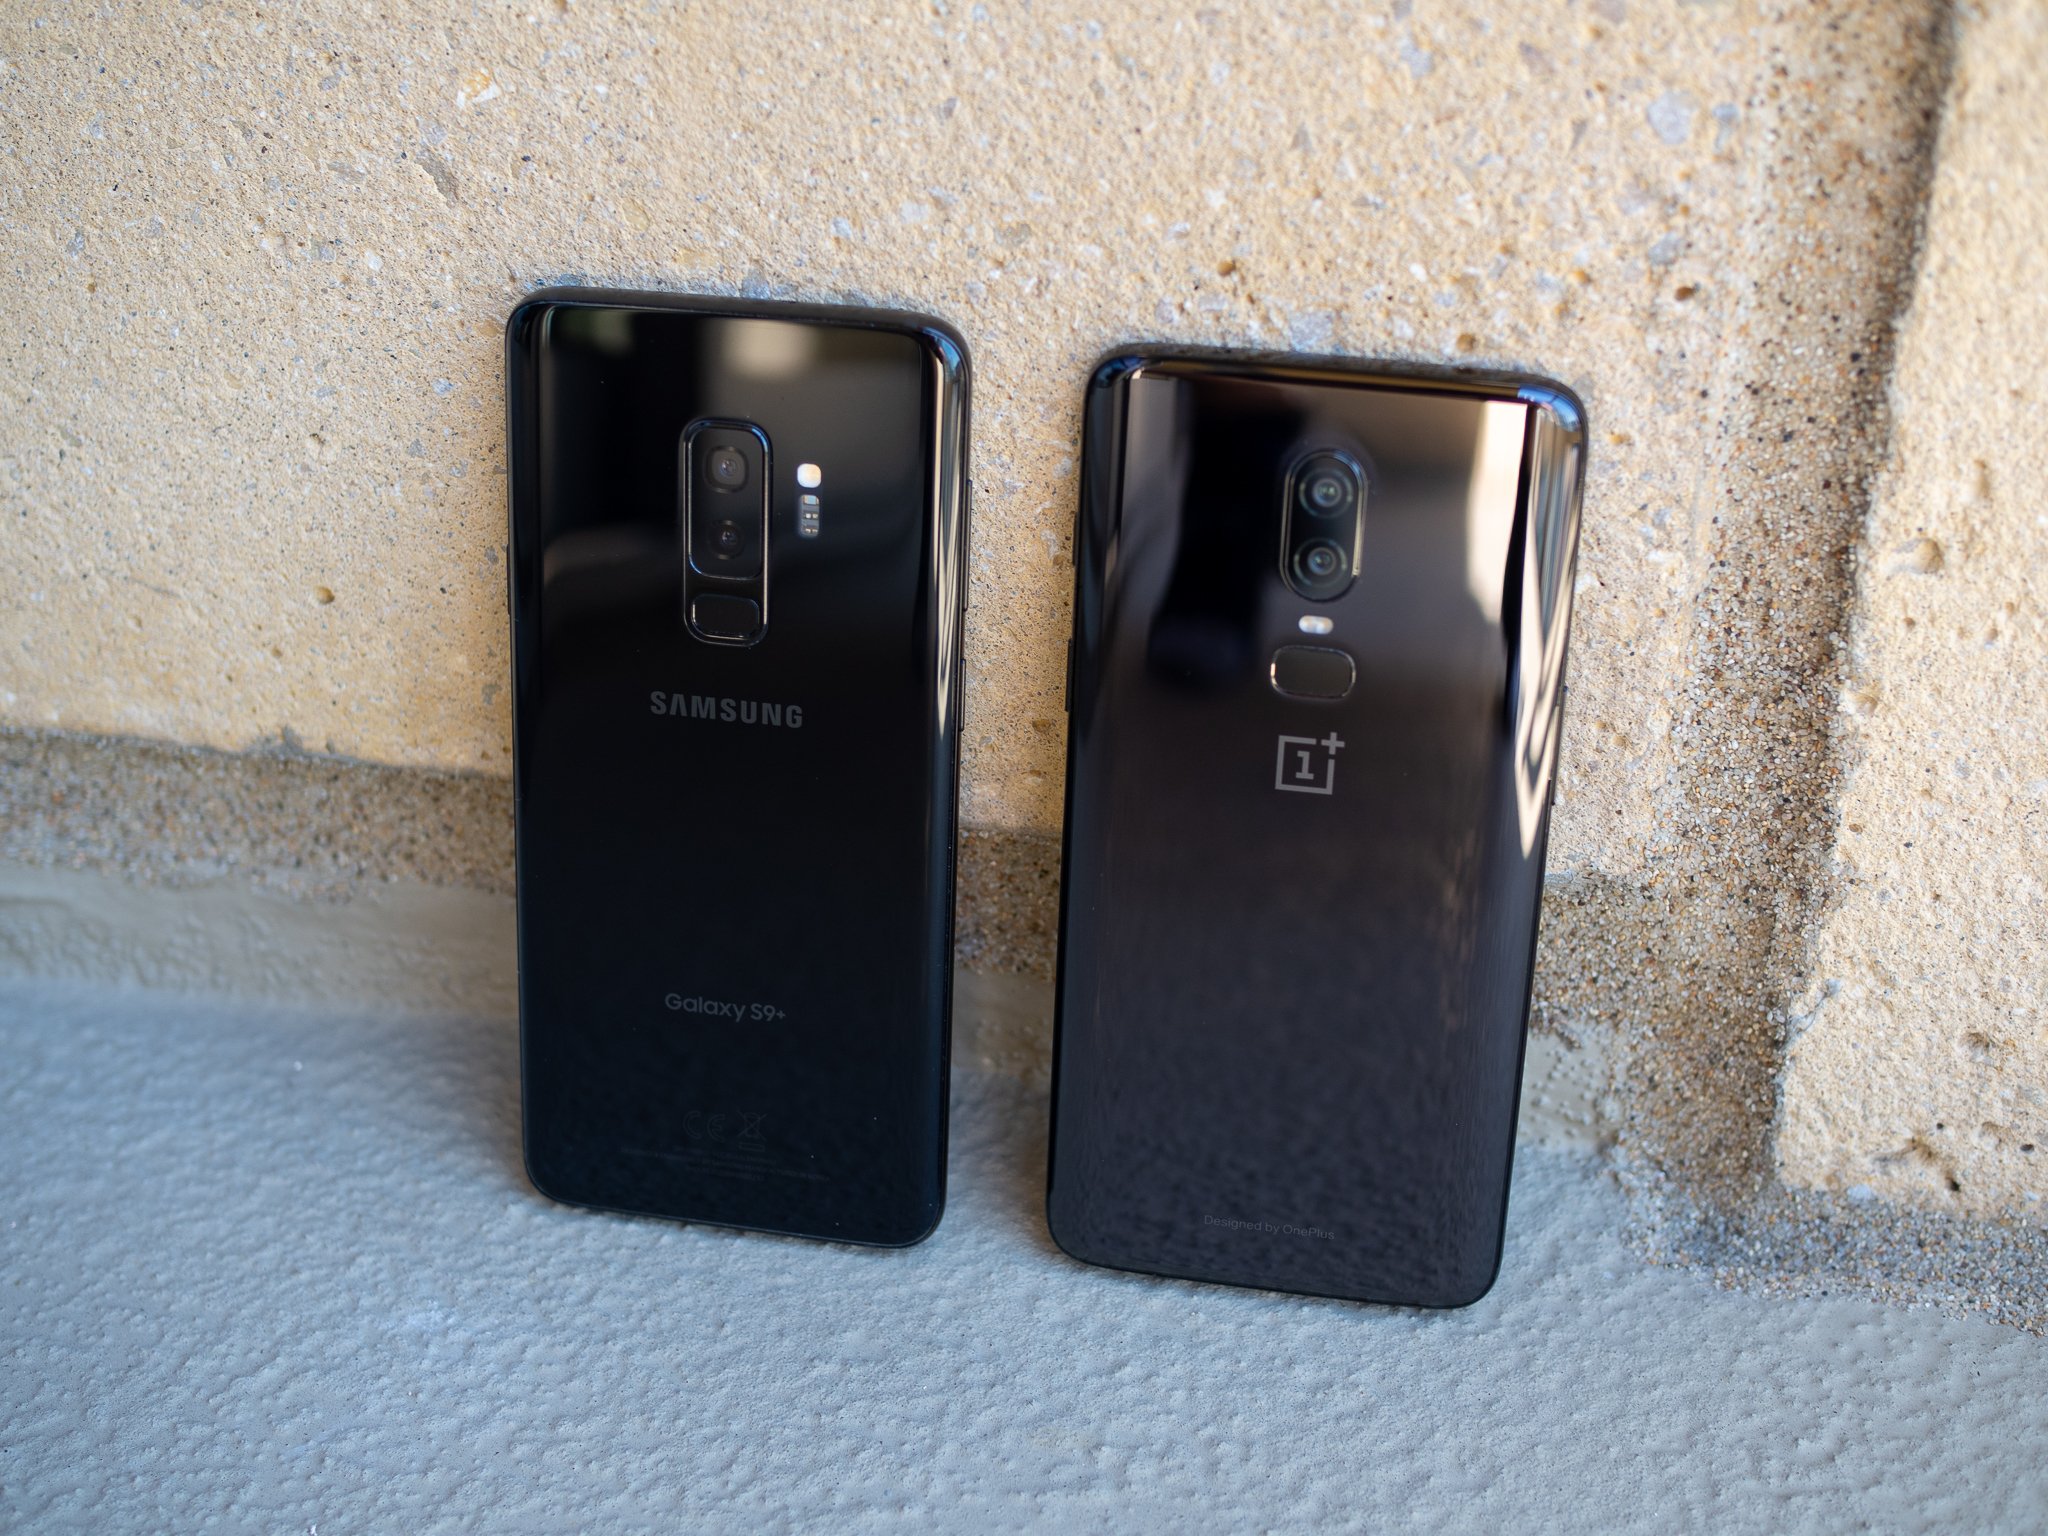 OnePlus 6 vs. Galaxy S9+